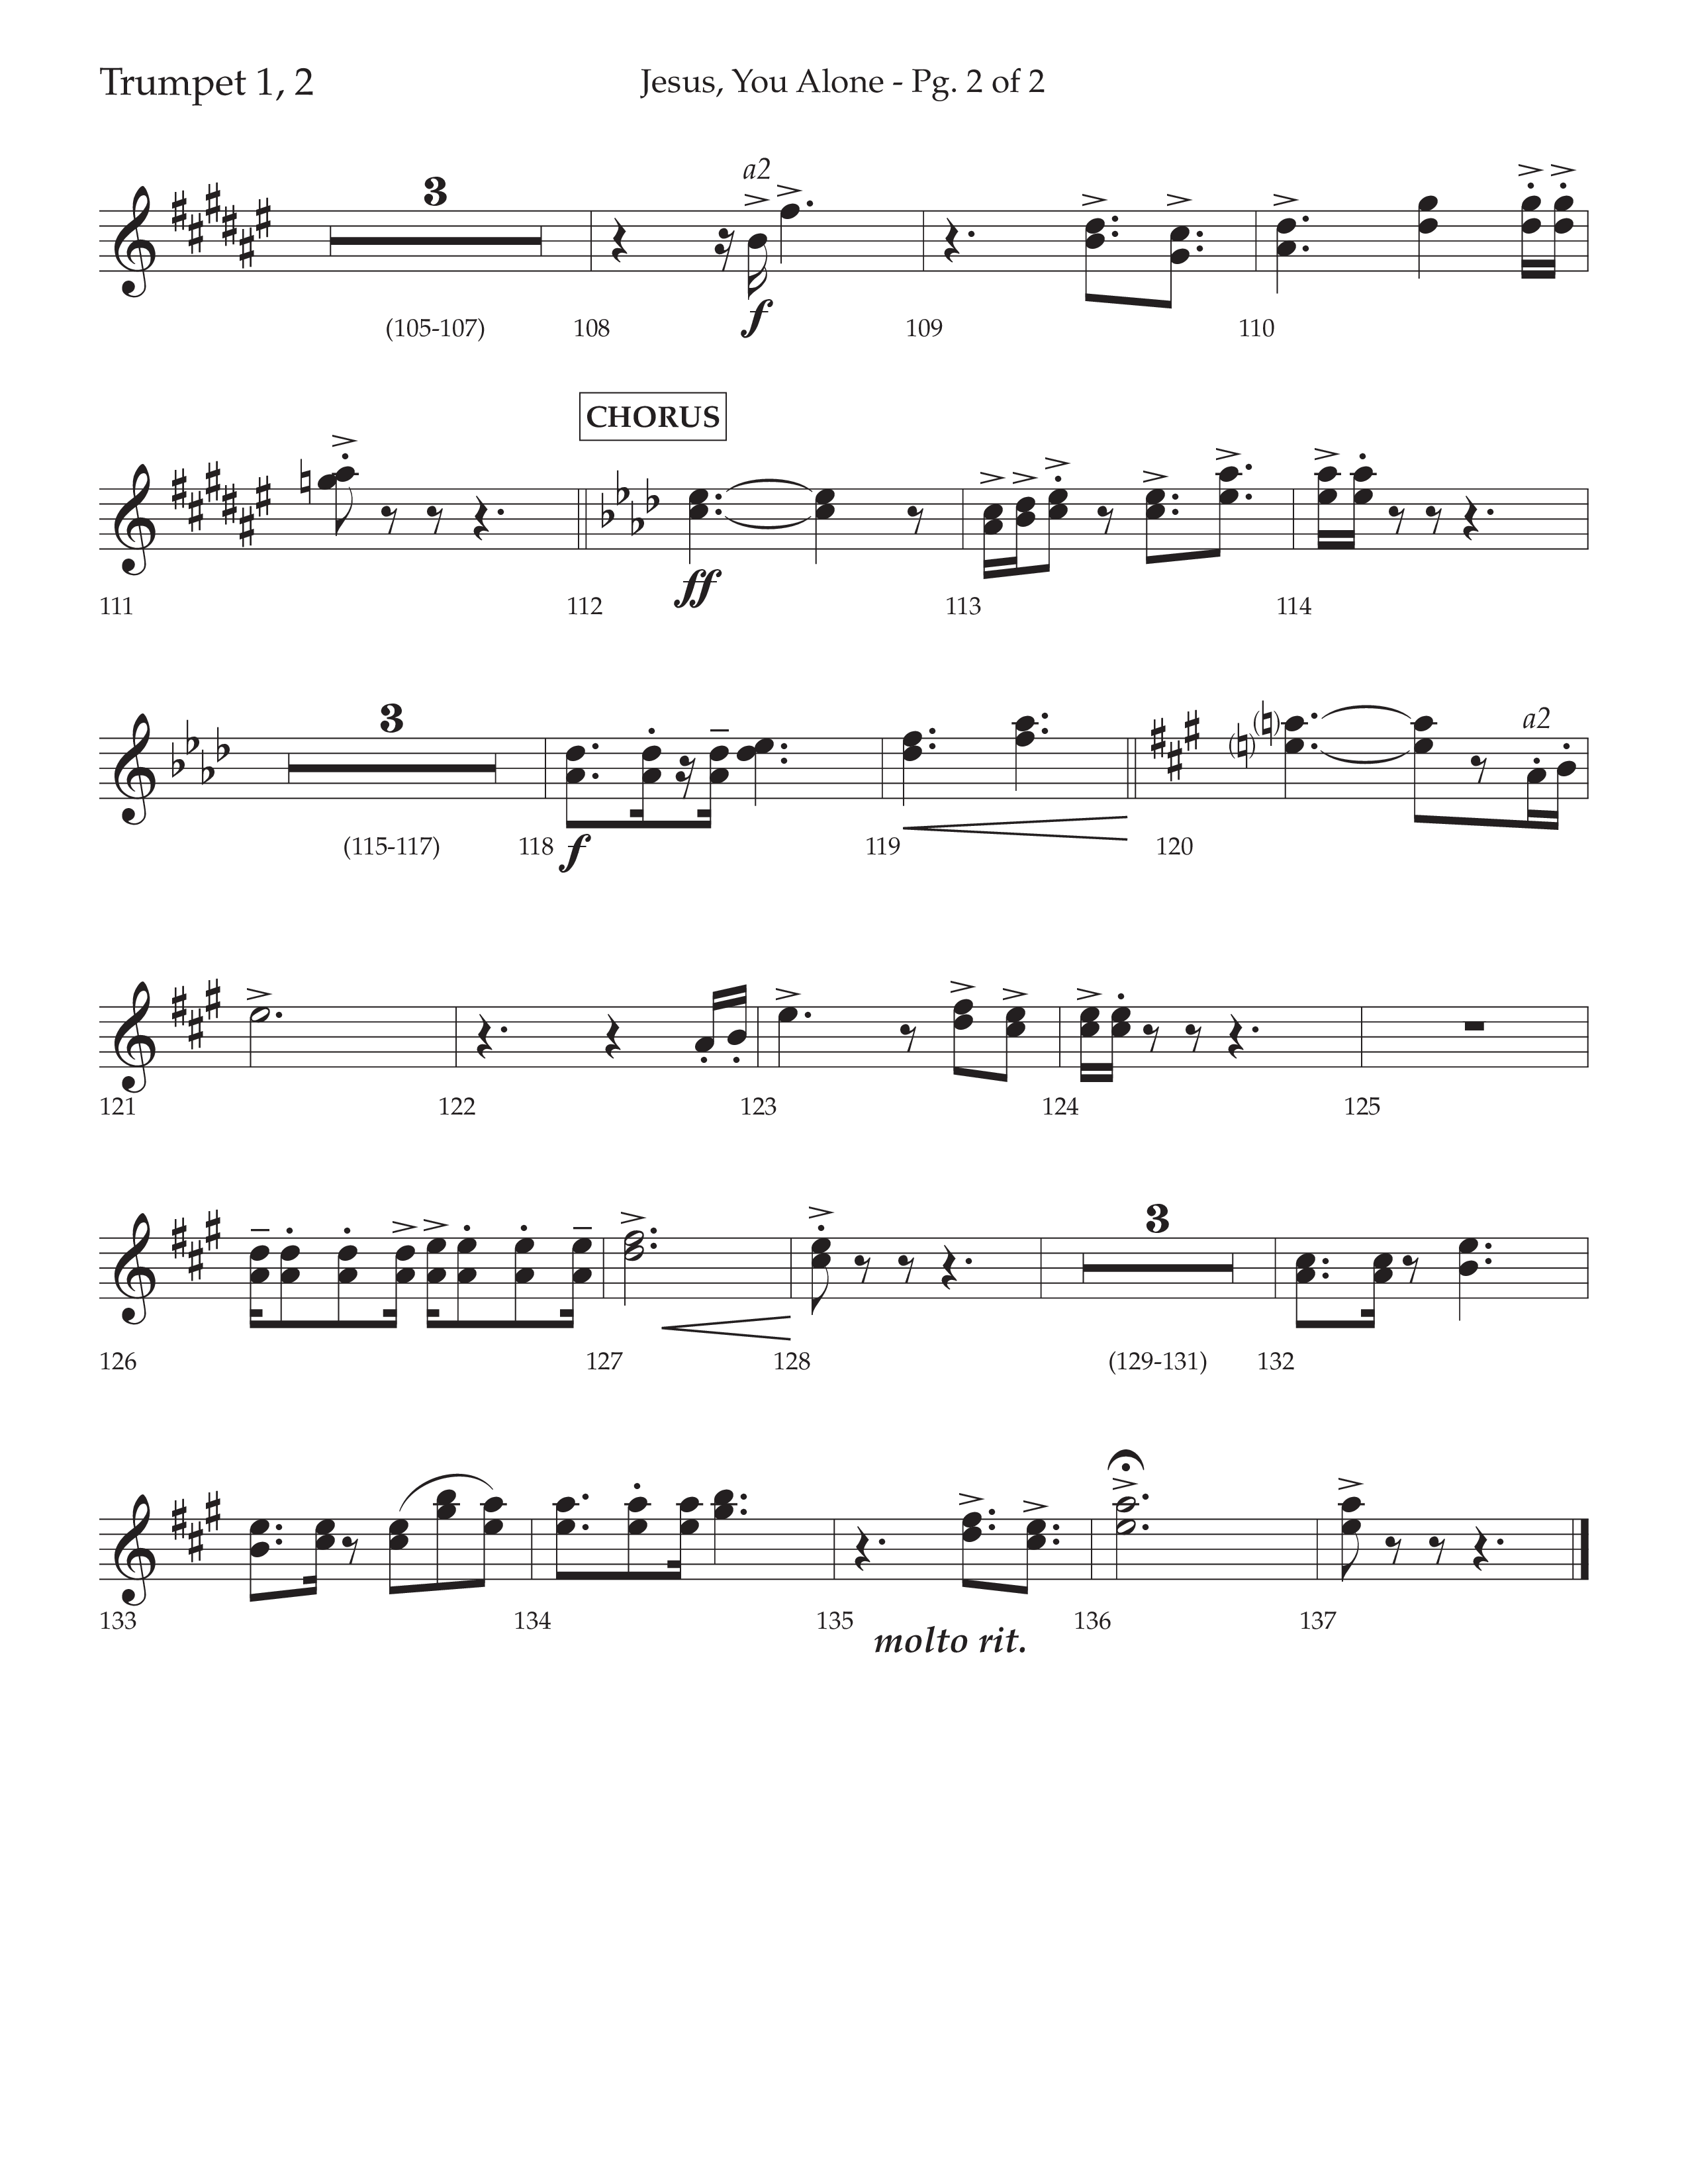 Jesus You Alone (Choral Anthem SATB) Trumpet 1,2 (Lifeway Choral / Arr. David Wise / Orch. Bradley Knight)